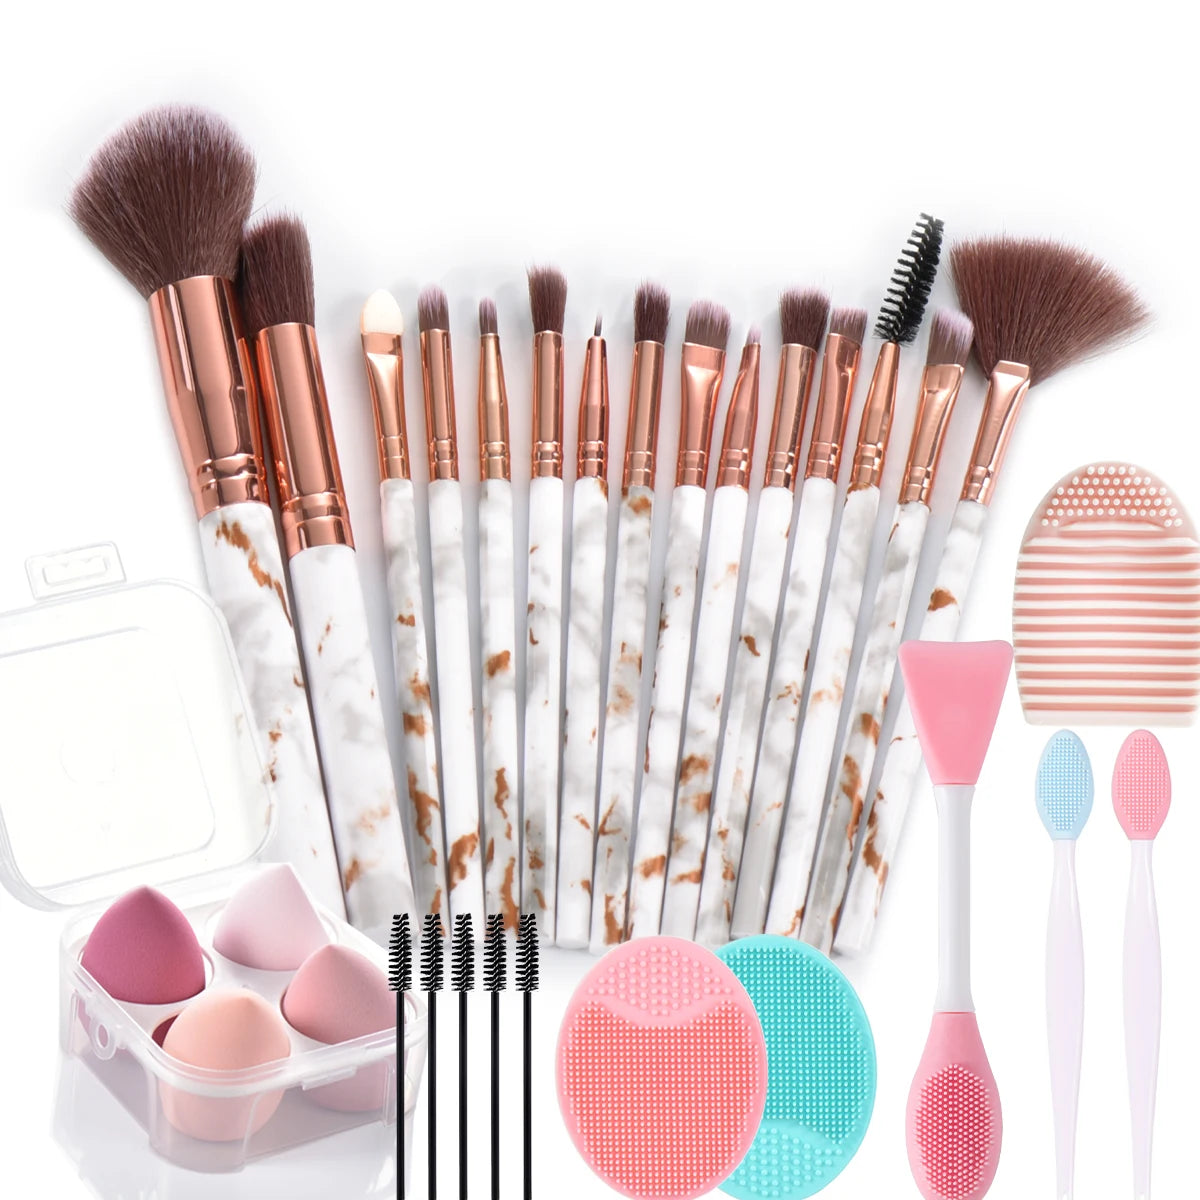 15pcs Marble makeup brushes set with makeup sponges